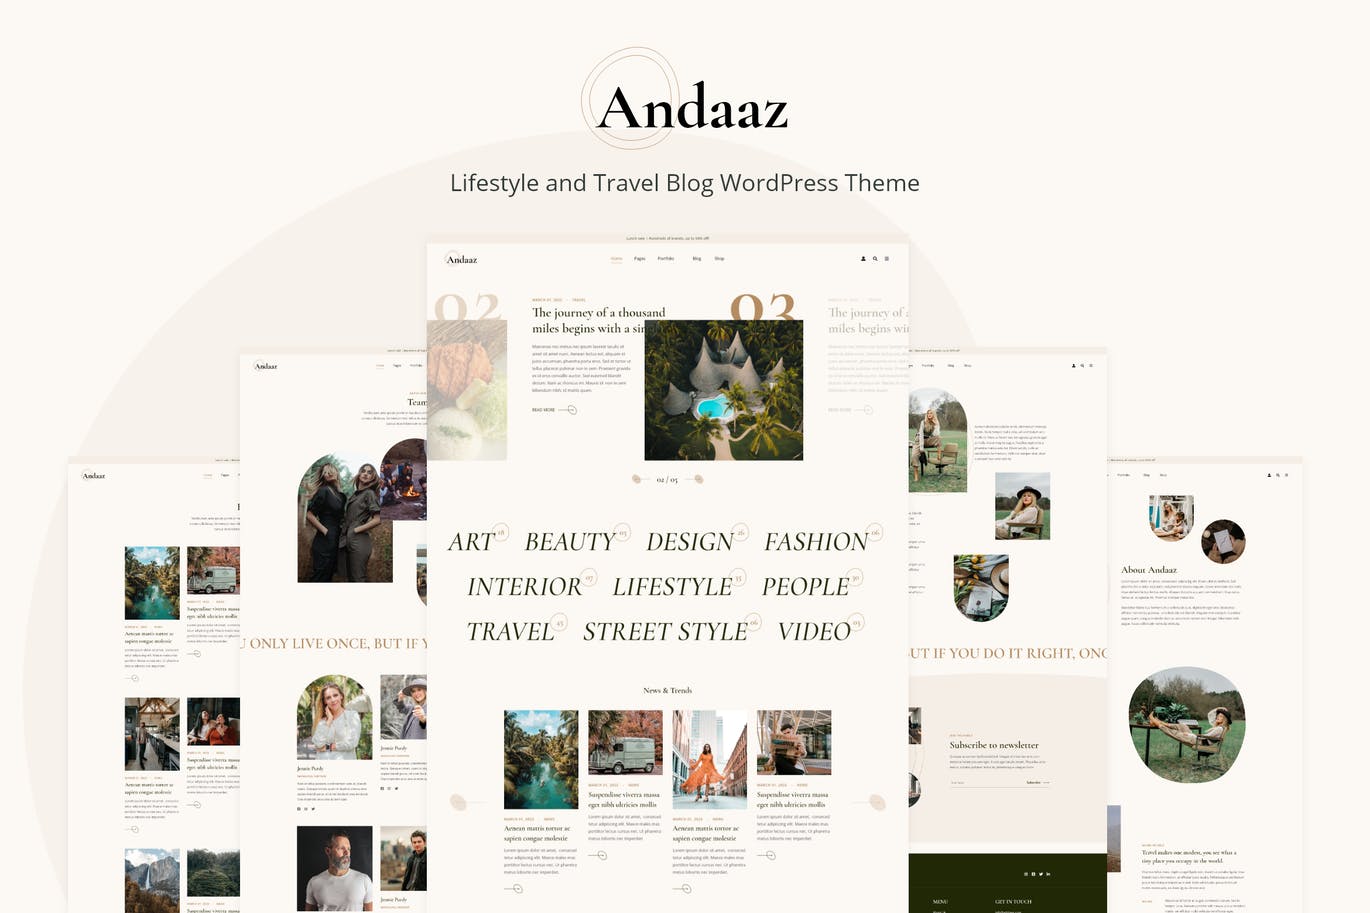 Gambiato-Andaaz - Lifestyle and Travel Blog WordPress Theme.jpeg